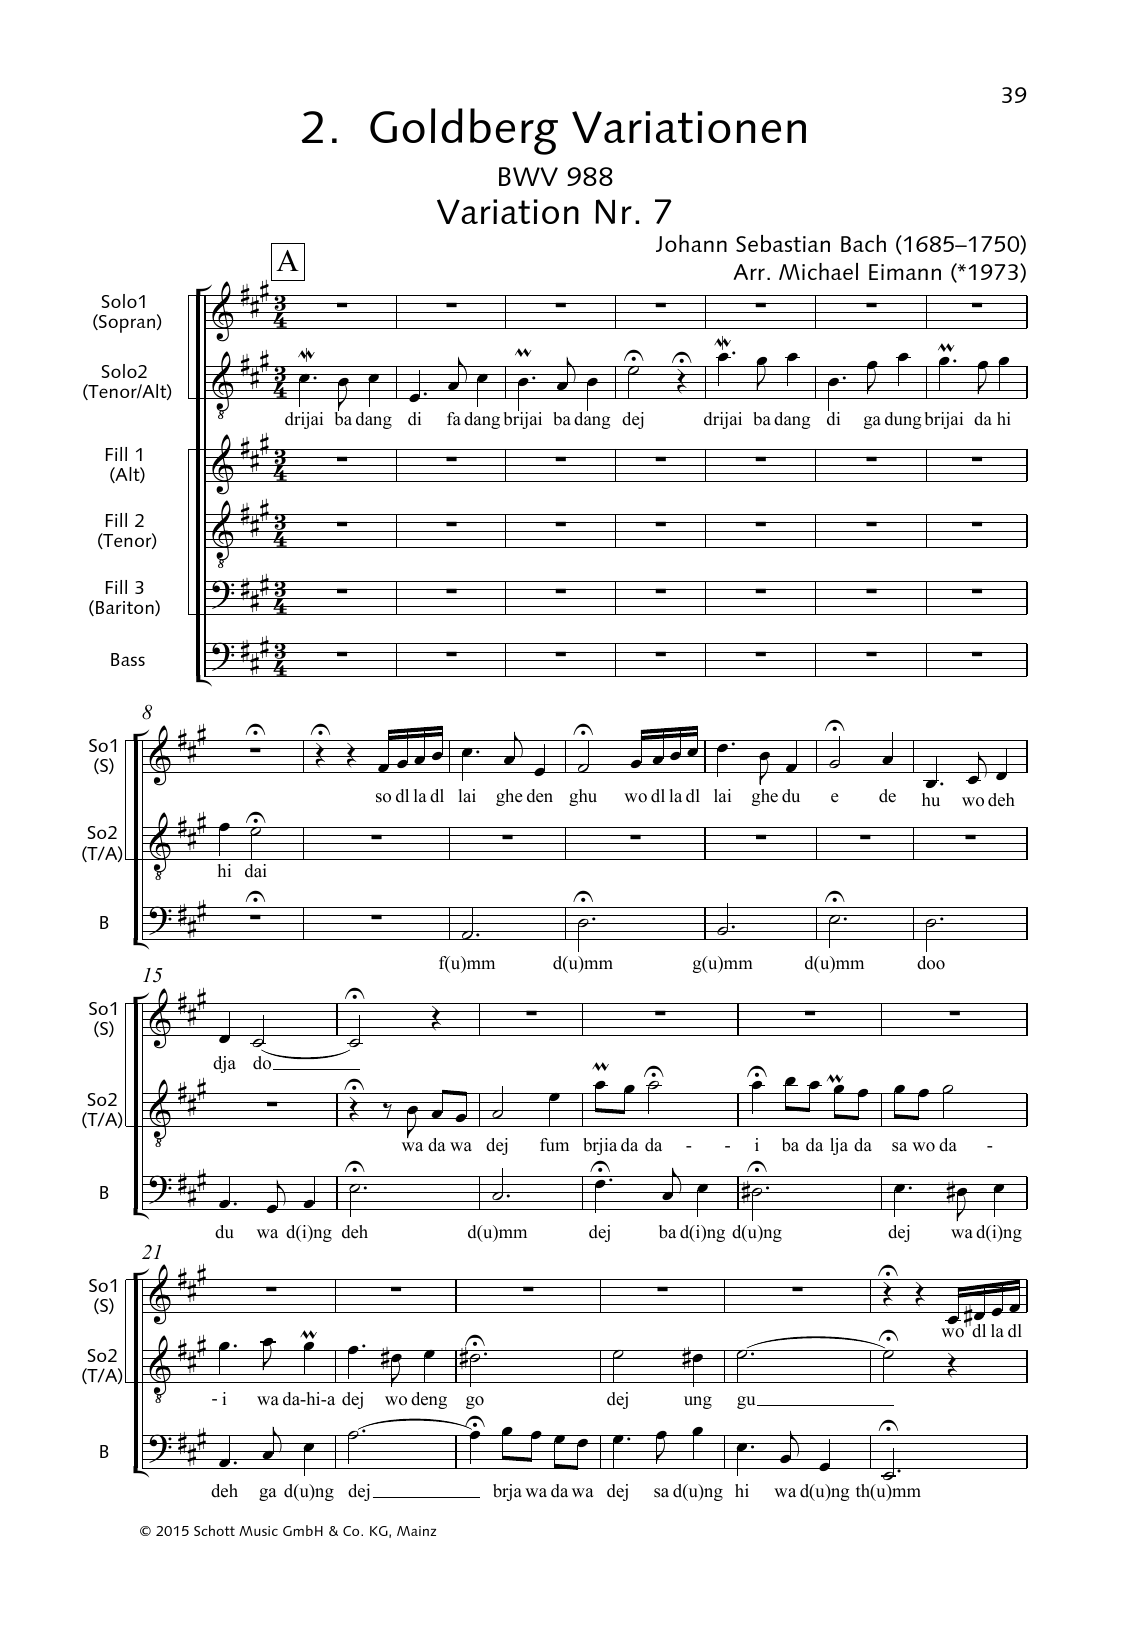 Johann Sebastian Bach Goldberg Variations, Variation No. 7 sheet music notes and chords arranged for Choir